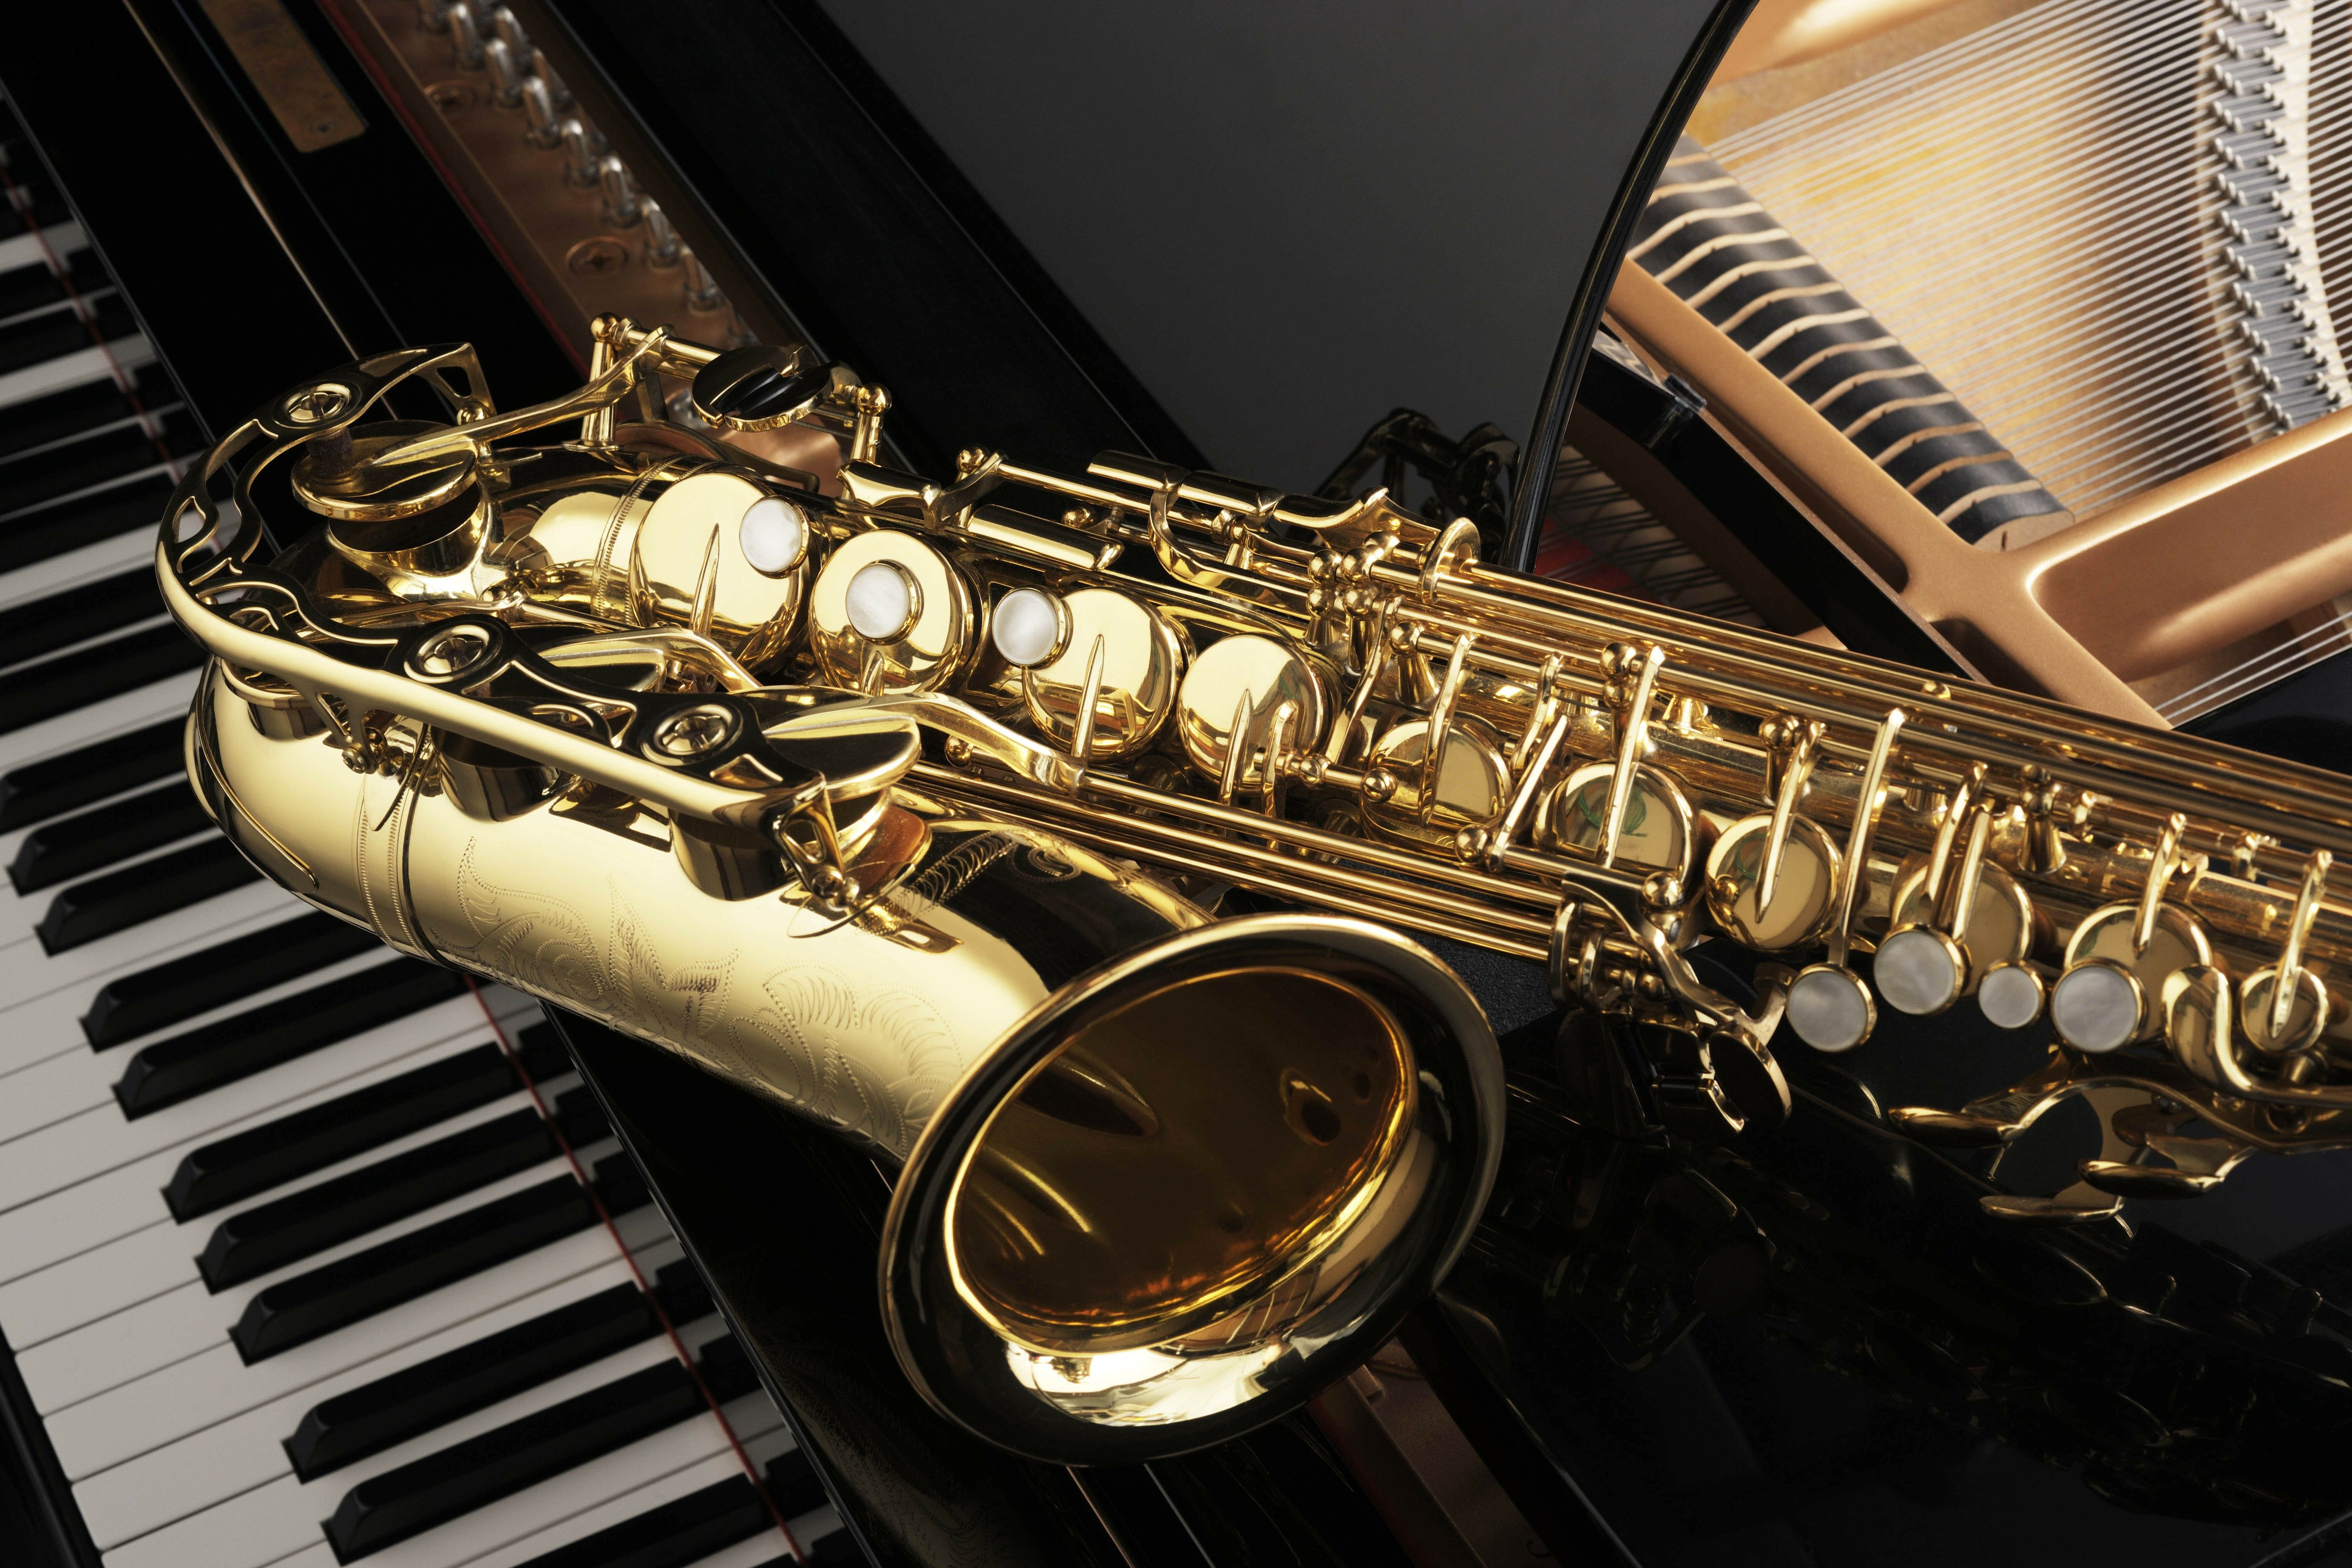 hd saxophone wallpaper, musical instrument, saxophone, wind instrument, music, clarinet family